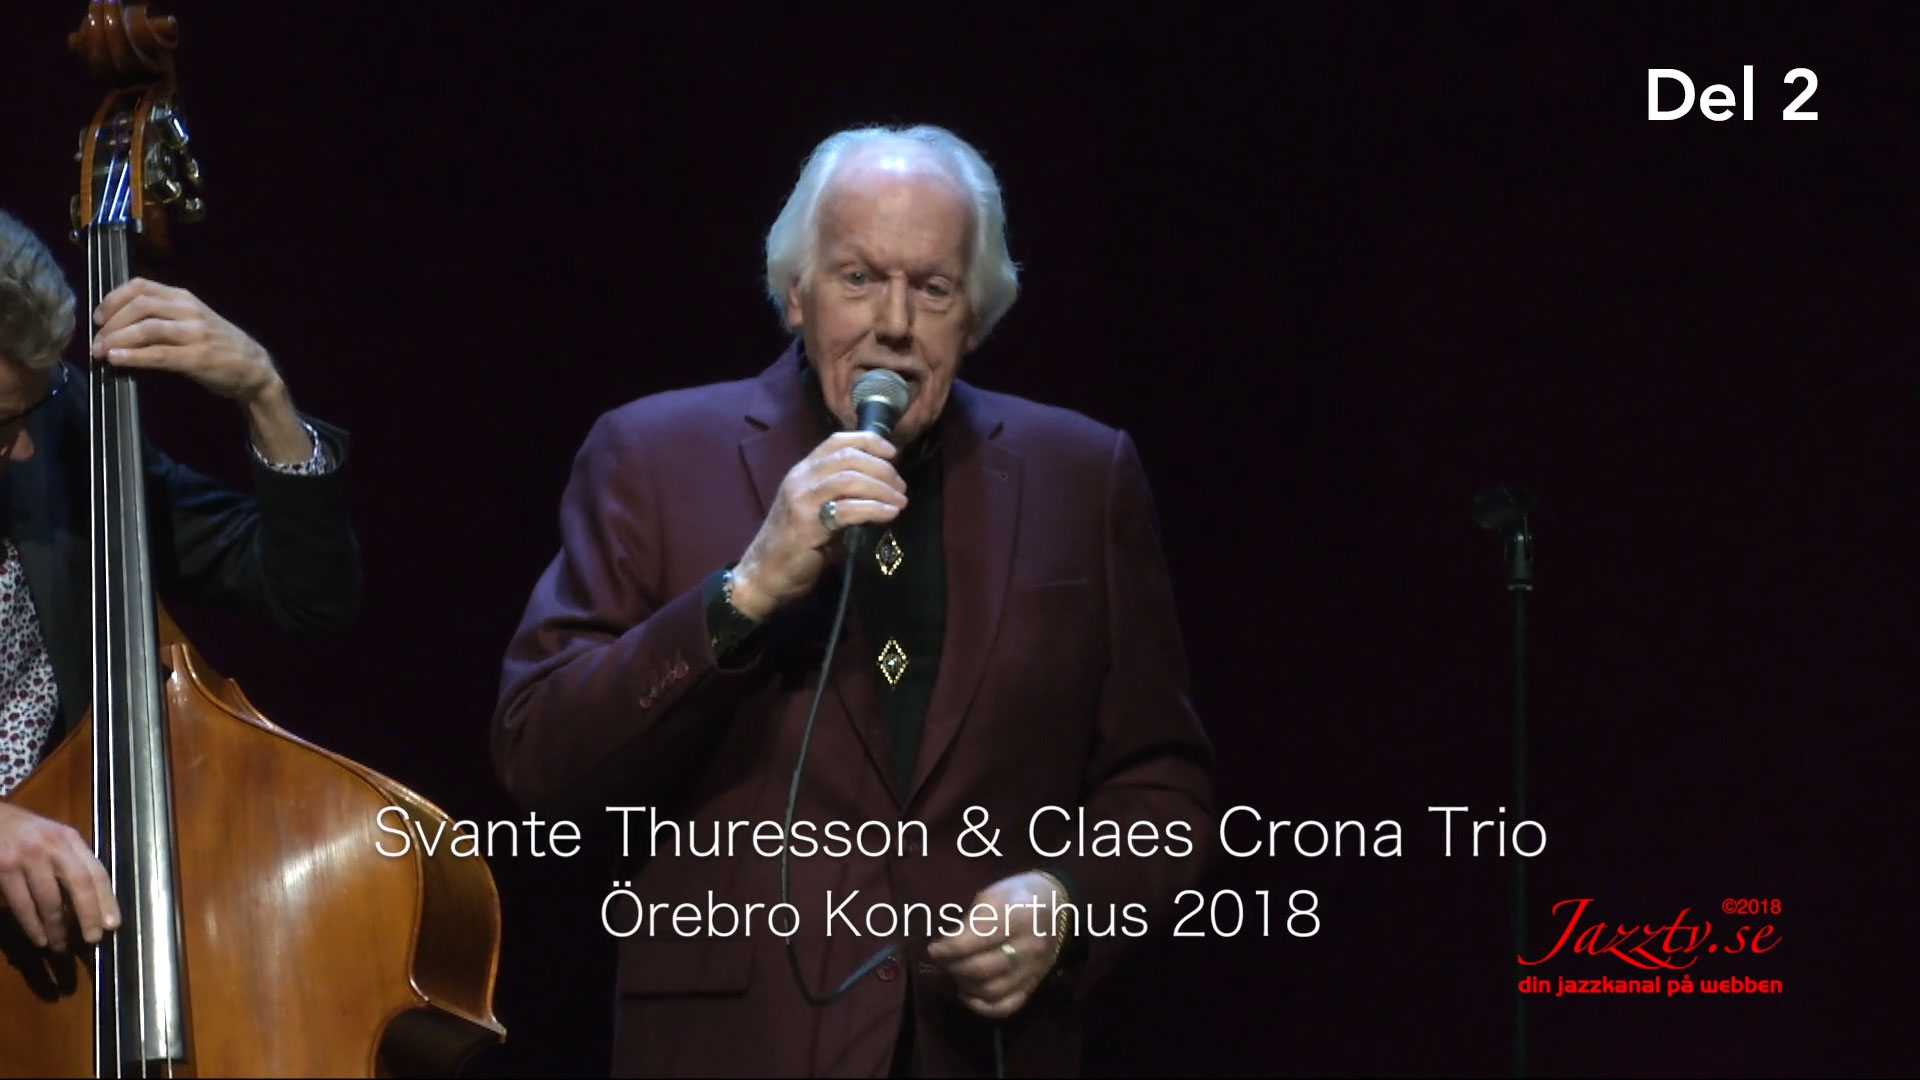 Svante Thuresson & Claes Crona Trio